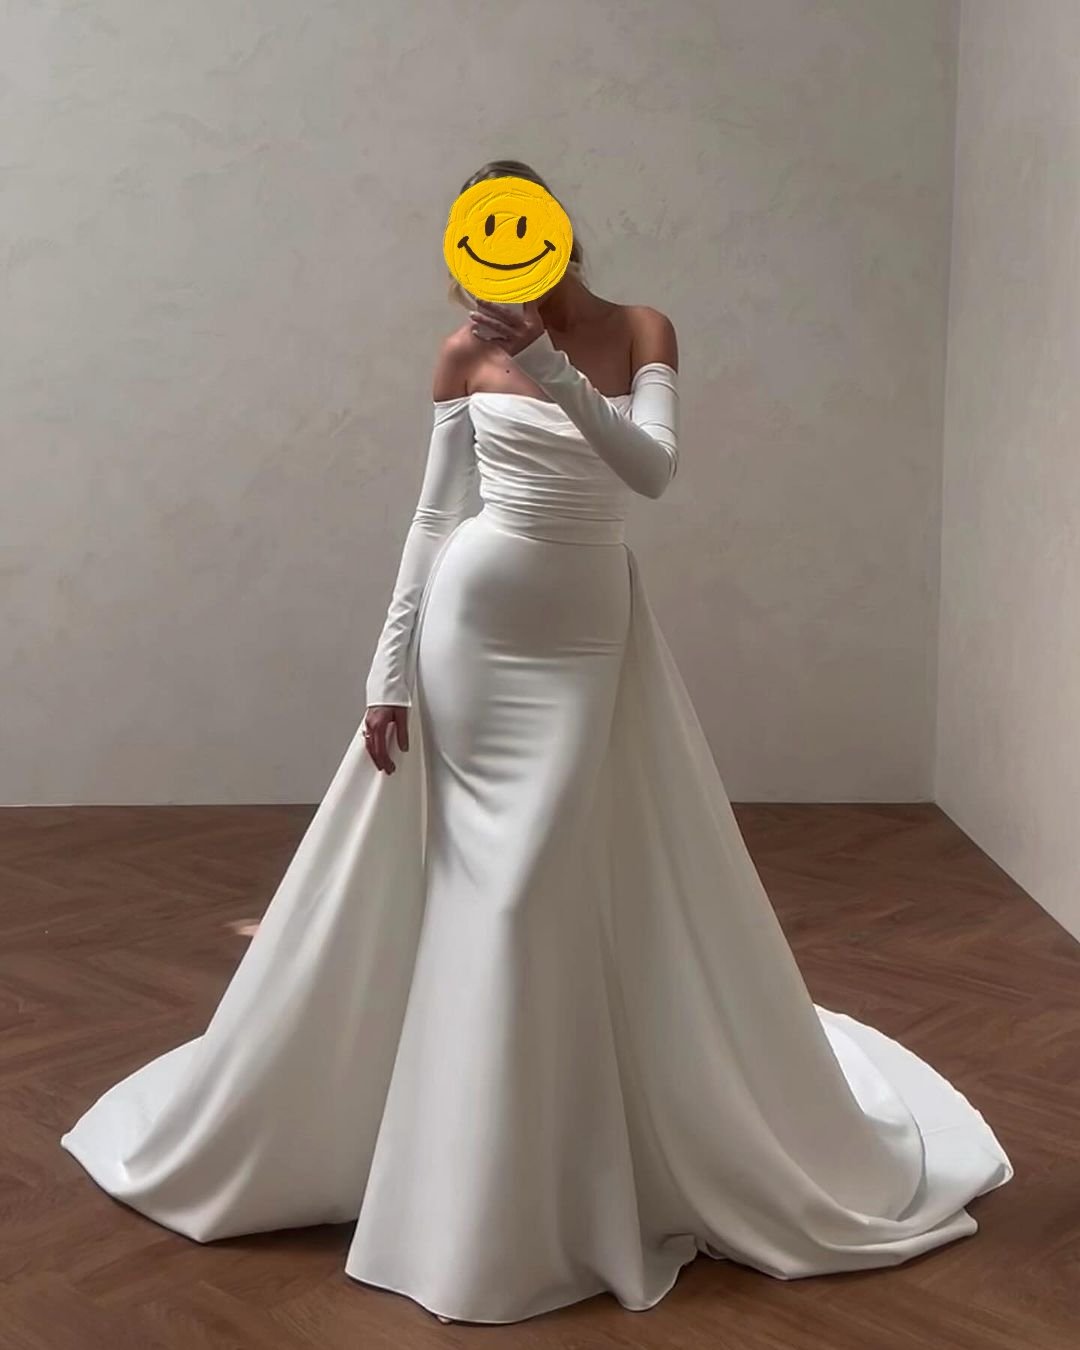 Long Sleeve Wedding Dresses